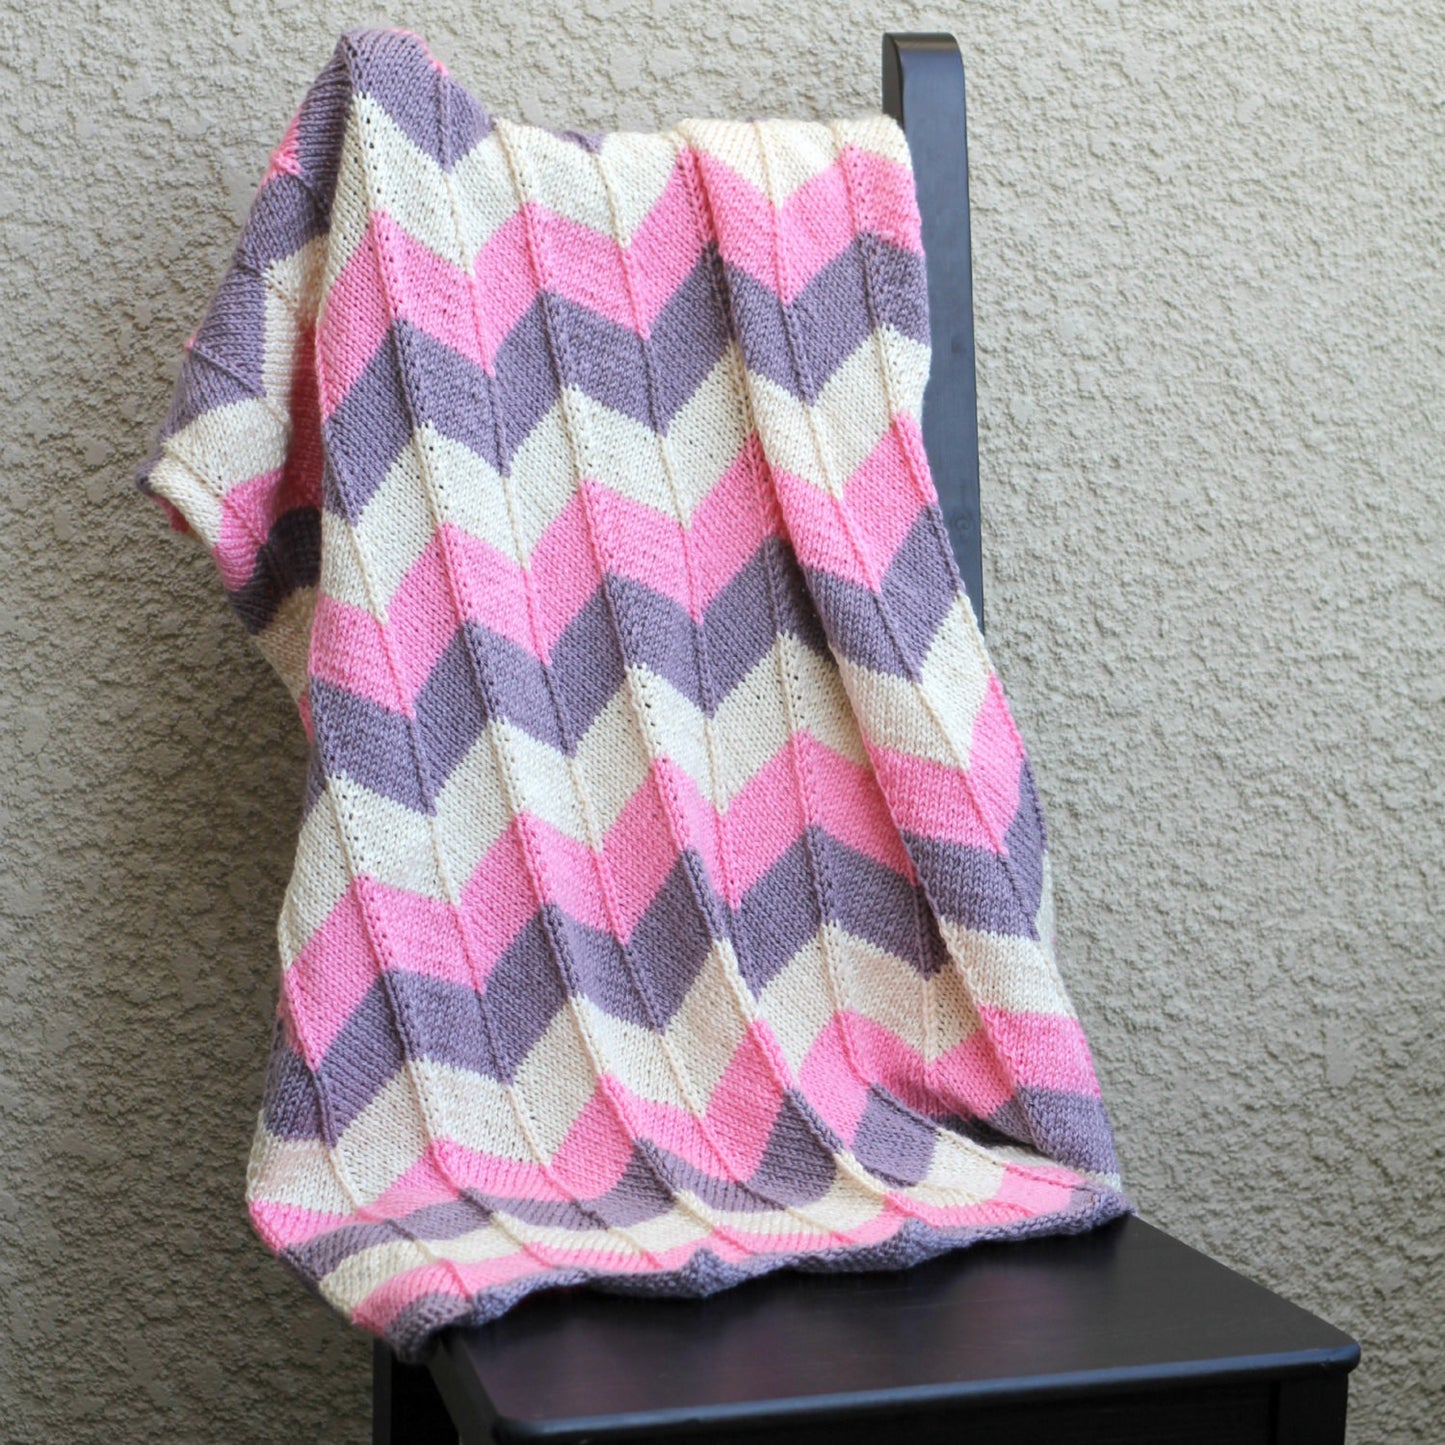 Pink knit baby blanket in chevron pattern